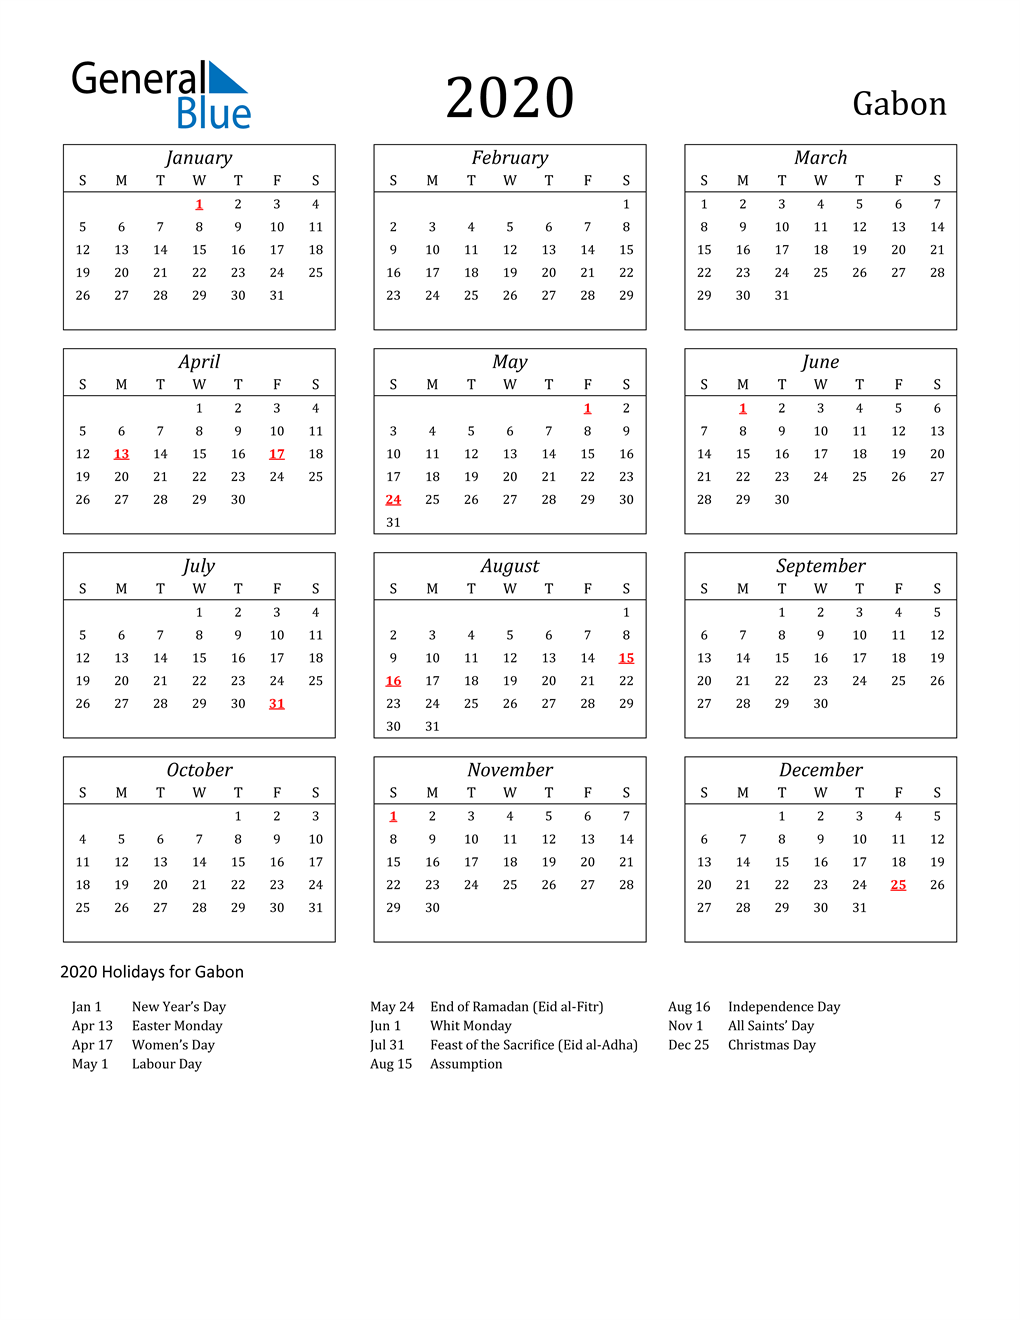 2020 Gabon Holiday Calendar